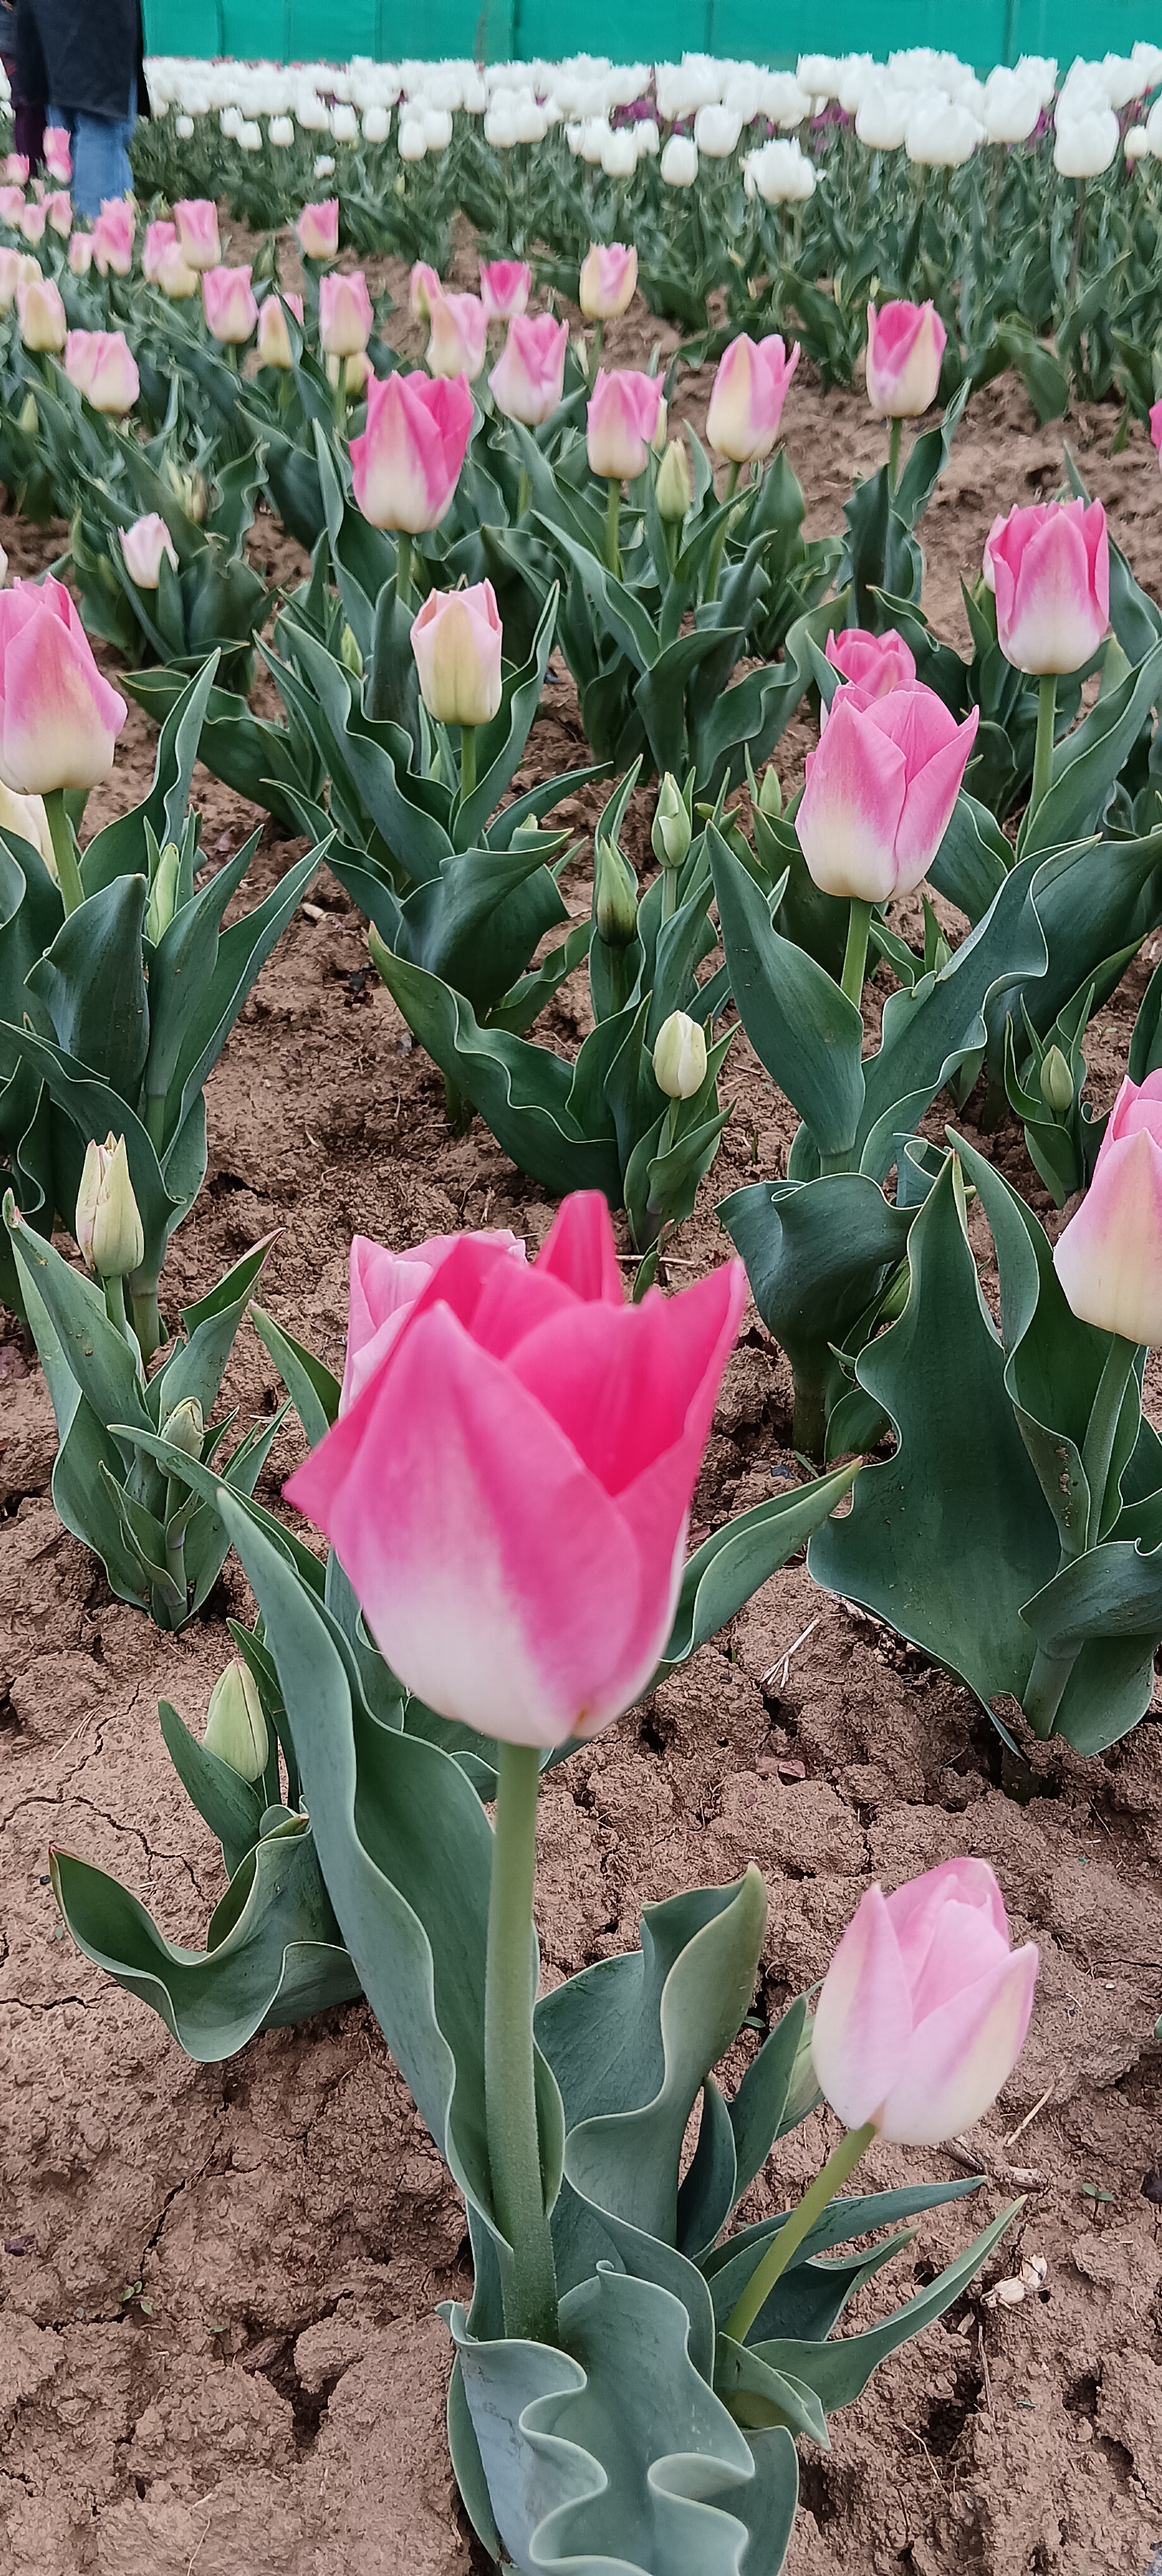 Tulip varieties